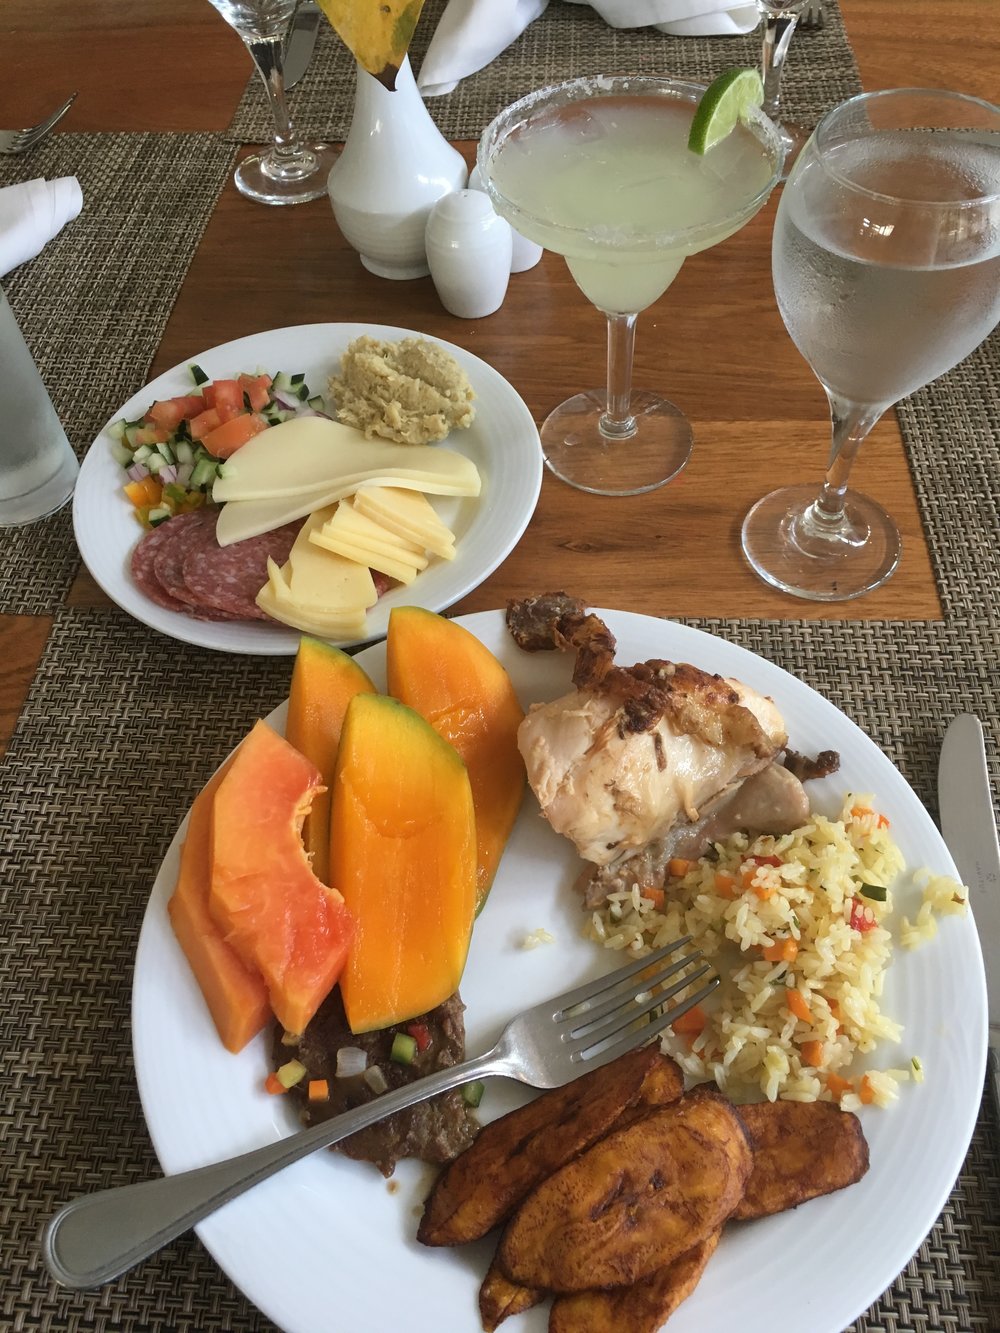 Amazing Gluten Free Lunch/Dinner "A La Carribean" | Grain Free Mamas